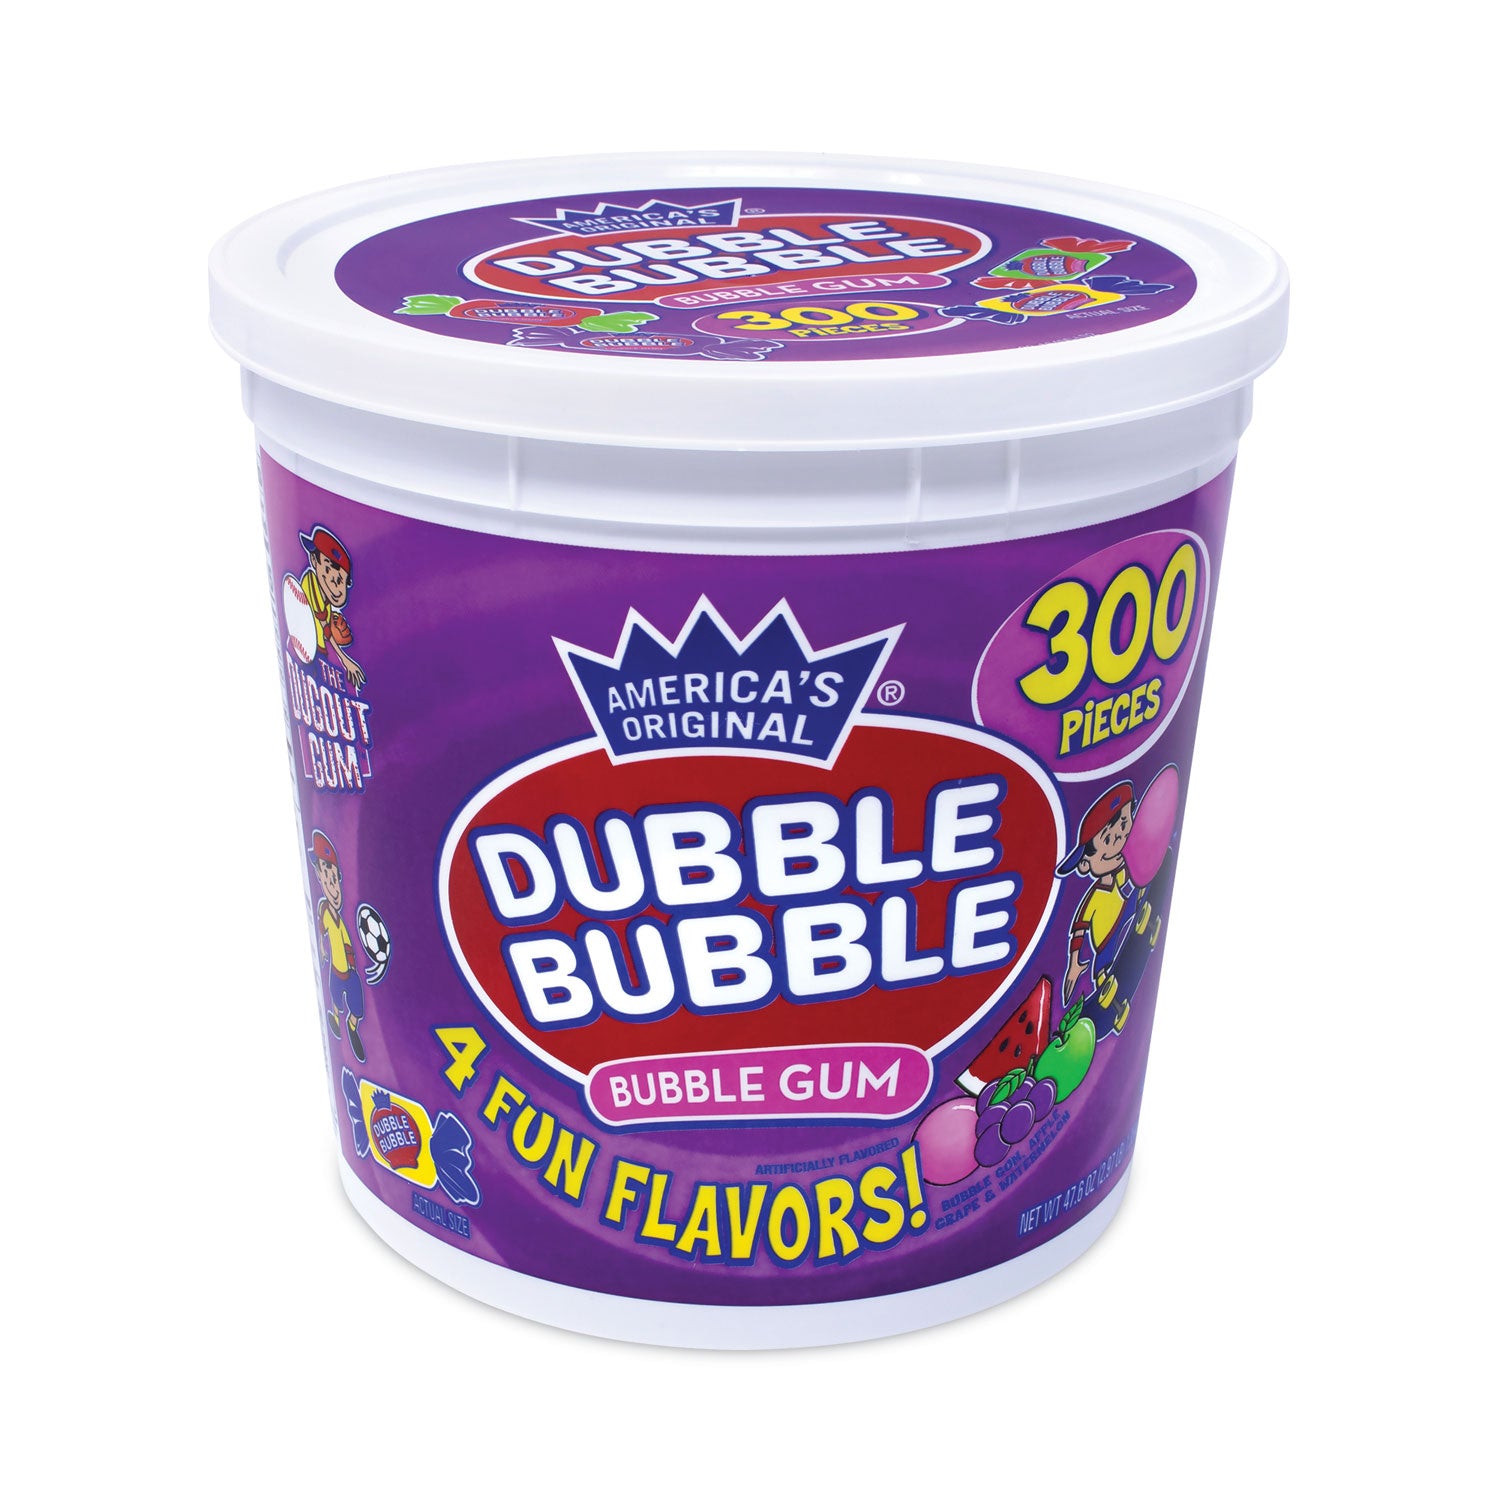 bubble-gum-assorted-flavor-twist-tub-300-pieces-tub-1-tub-carton-ships-in-1-3-business-days_grr22000223 - 3